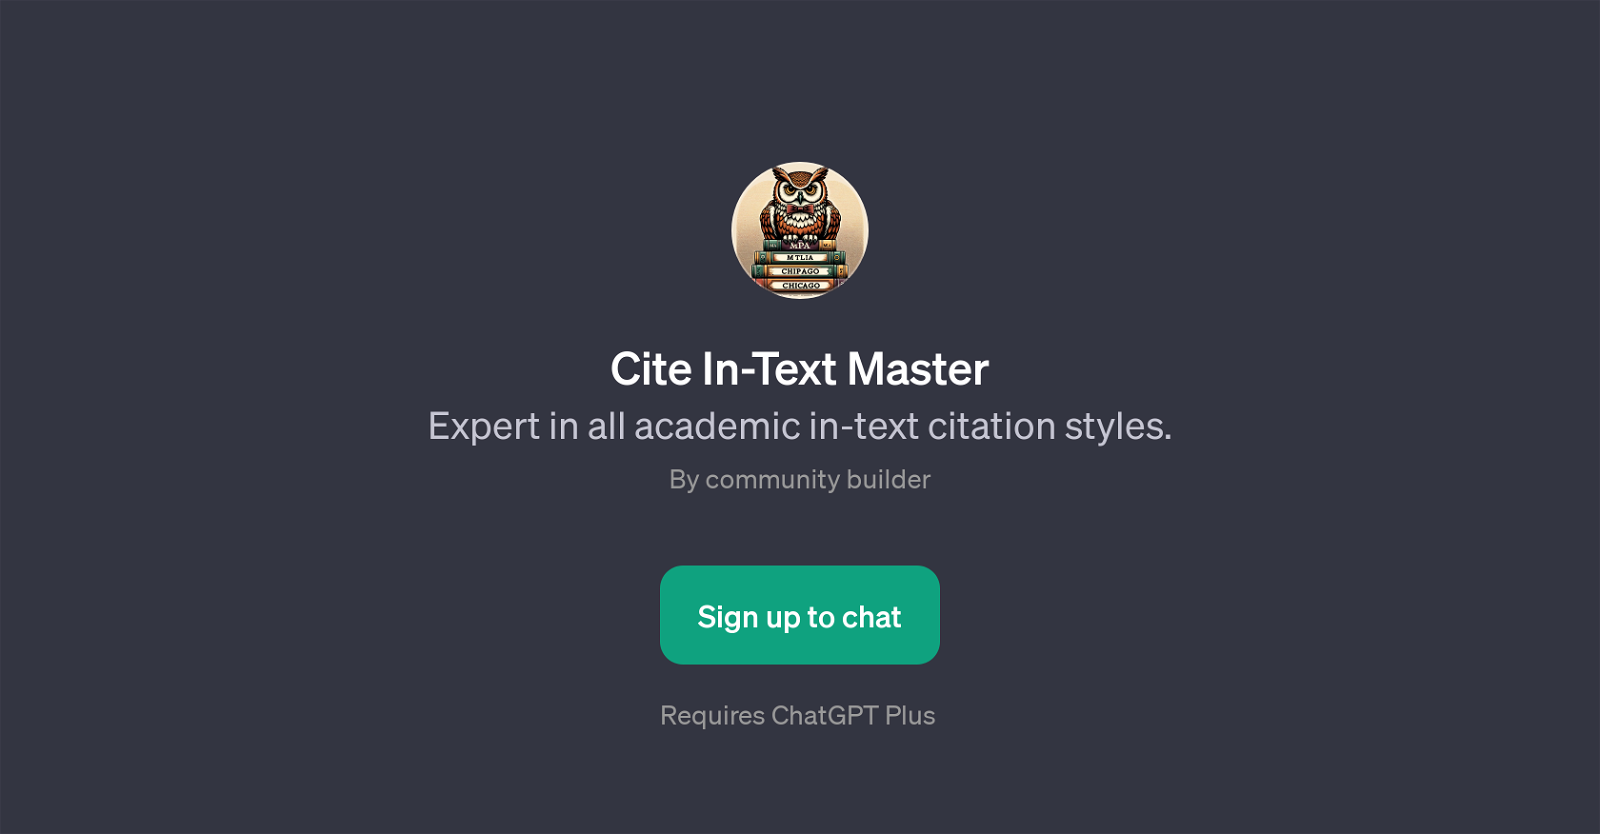 Cite In-Text Master website